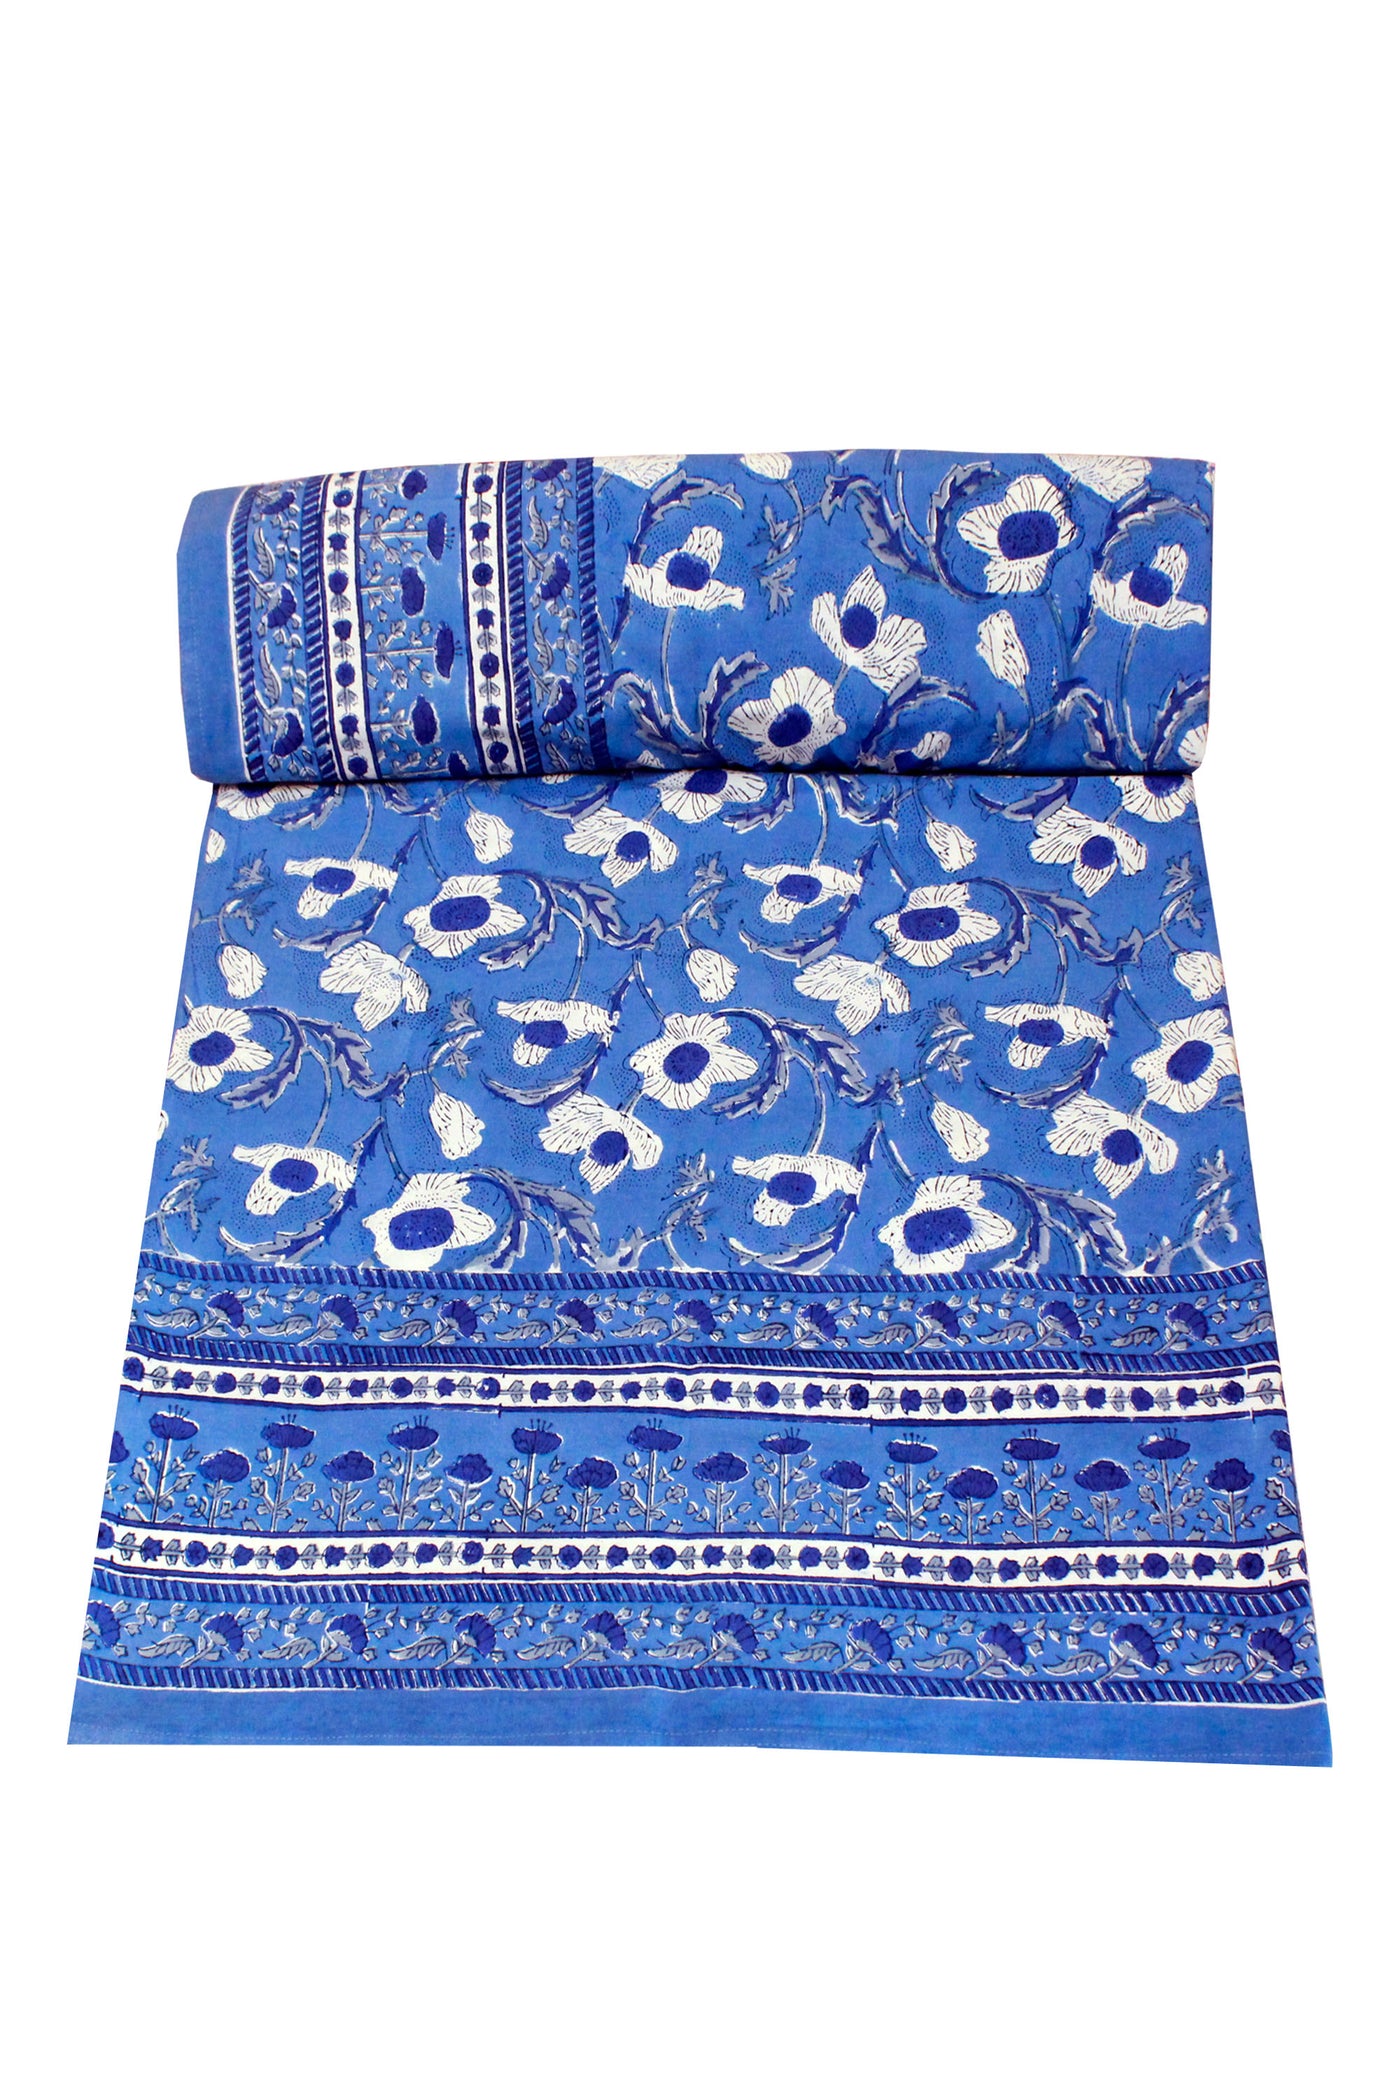 Cotton Floral Jaal  Block Print Bedsheet in Midnight Blue